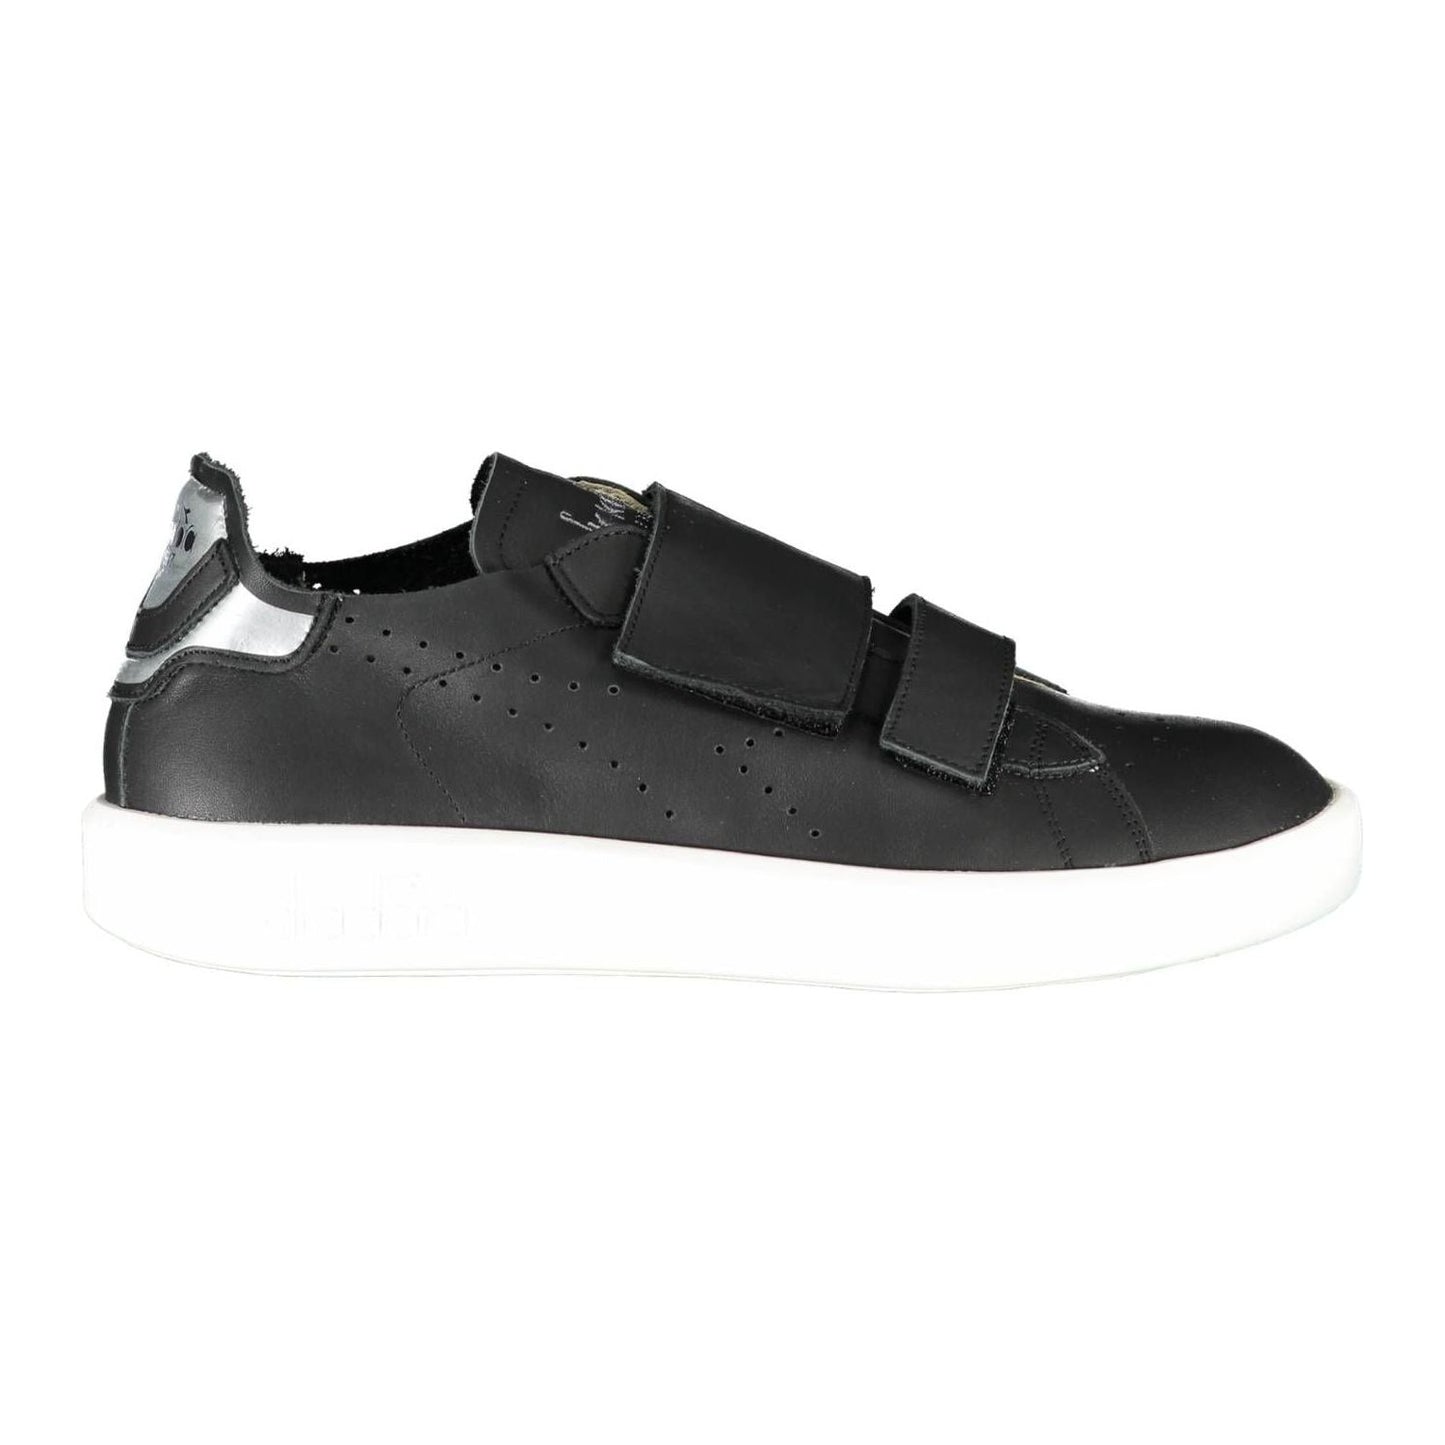 Diadora Sleek Black Leather Sneakers with Contrast Details sleek-black-leather-sneakers-with-contrast-details